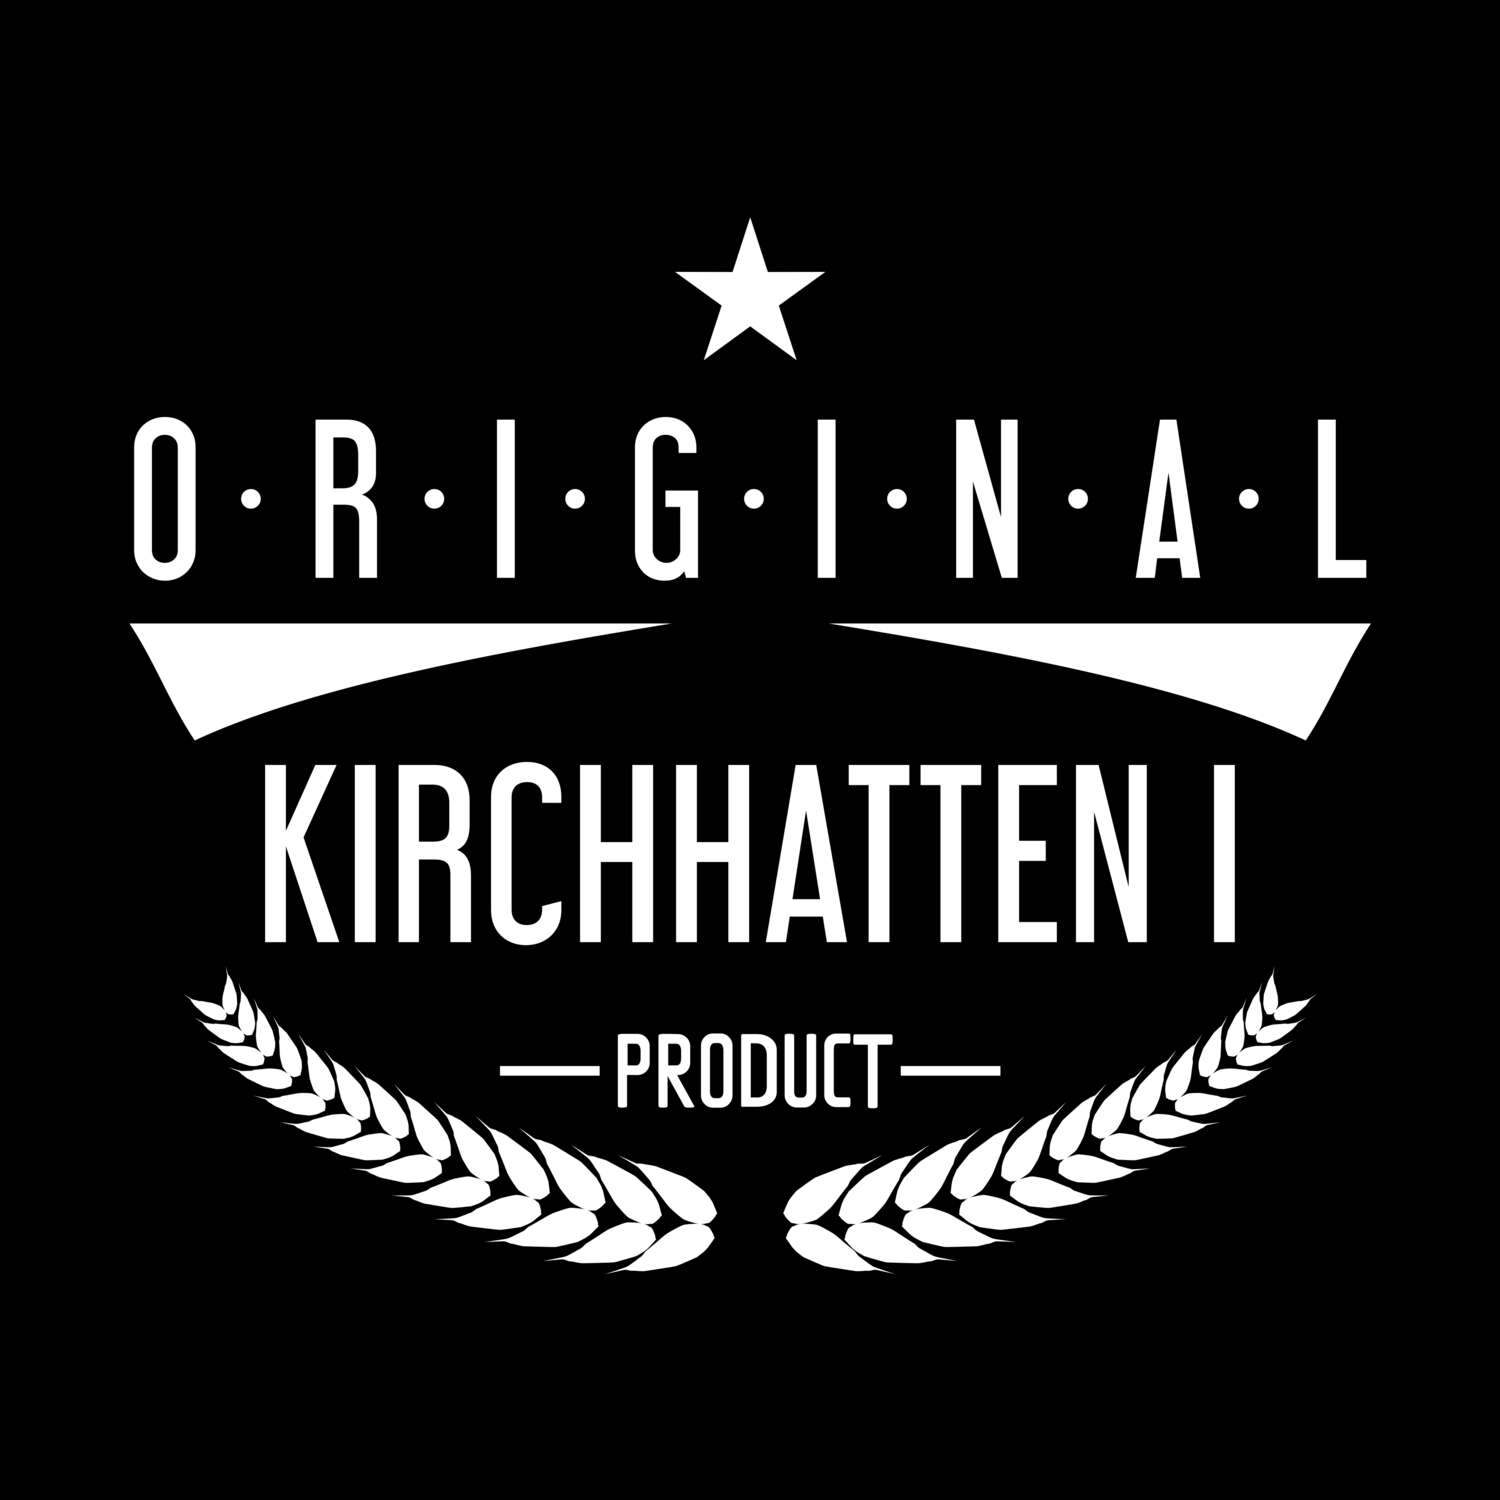 Kirchhatten I T-Shirt »Original Product«